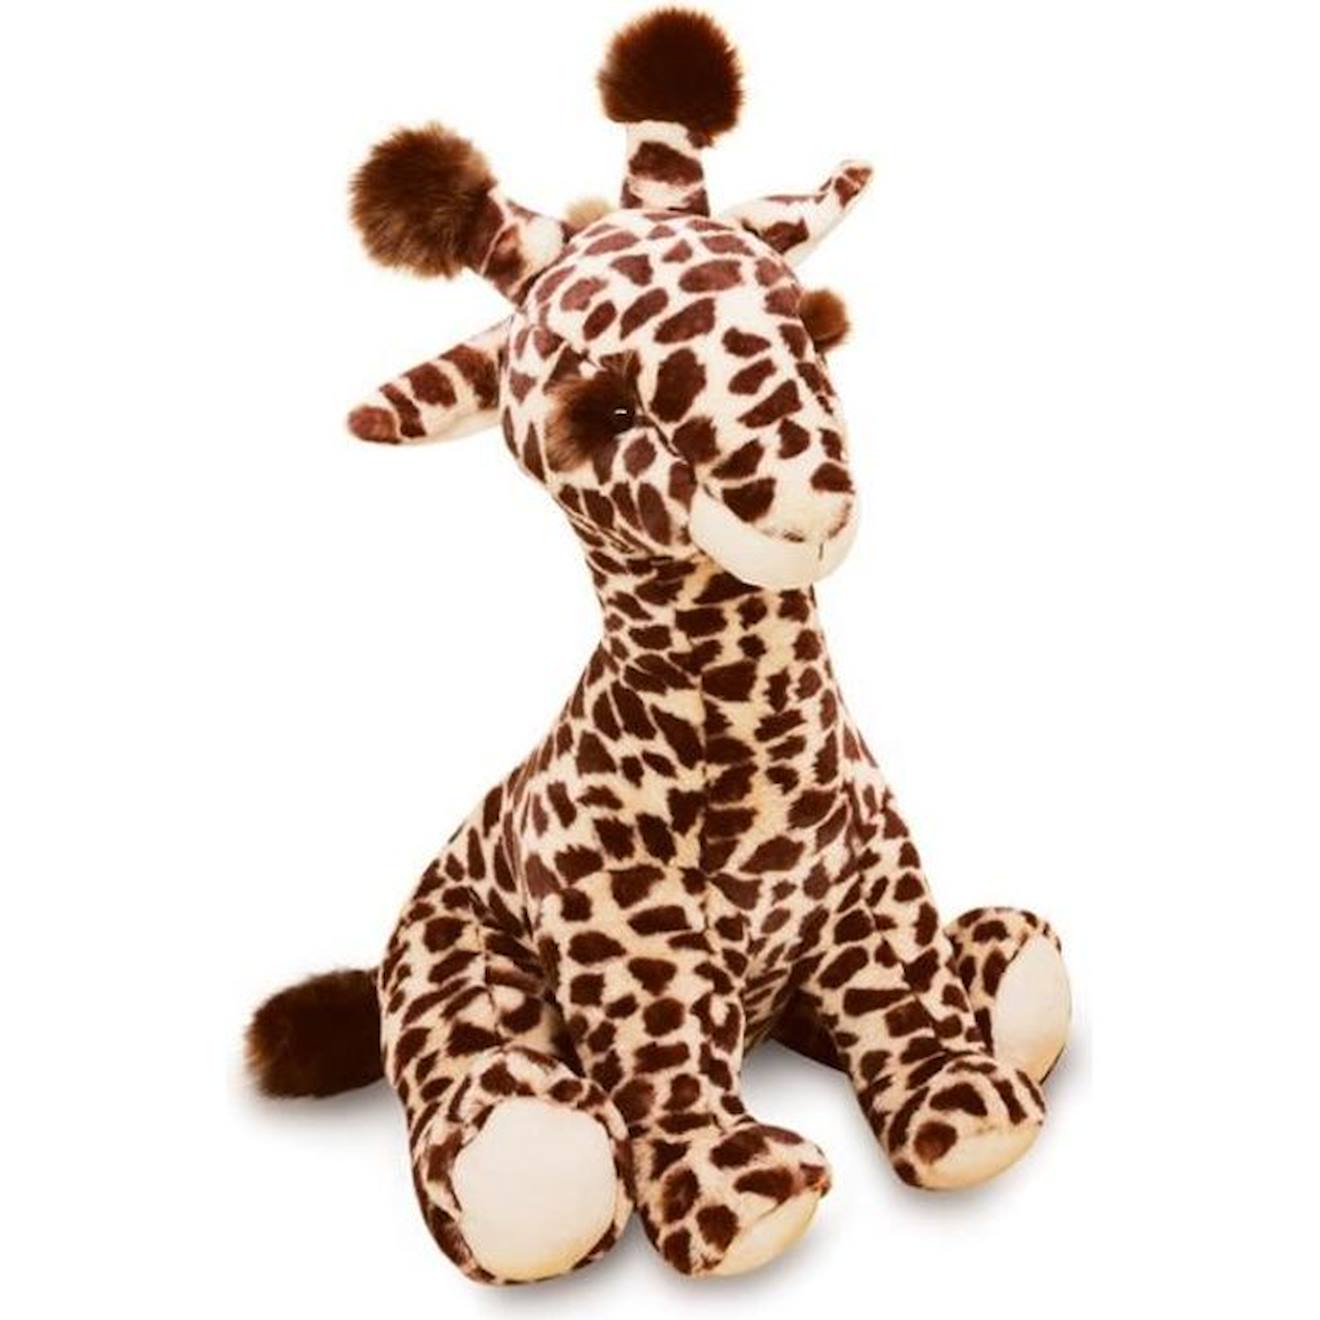 Peluche avec doudou personnalisé - Girafe couleurs savane